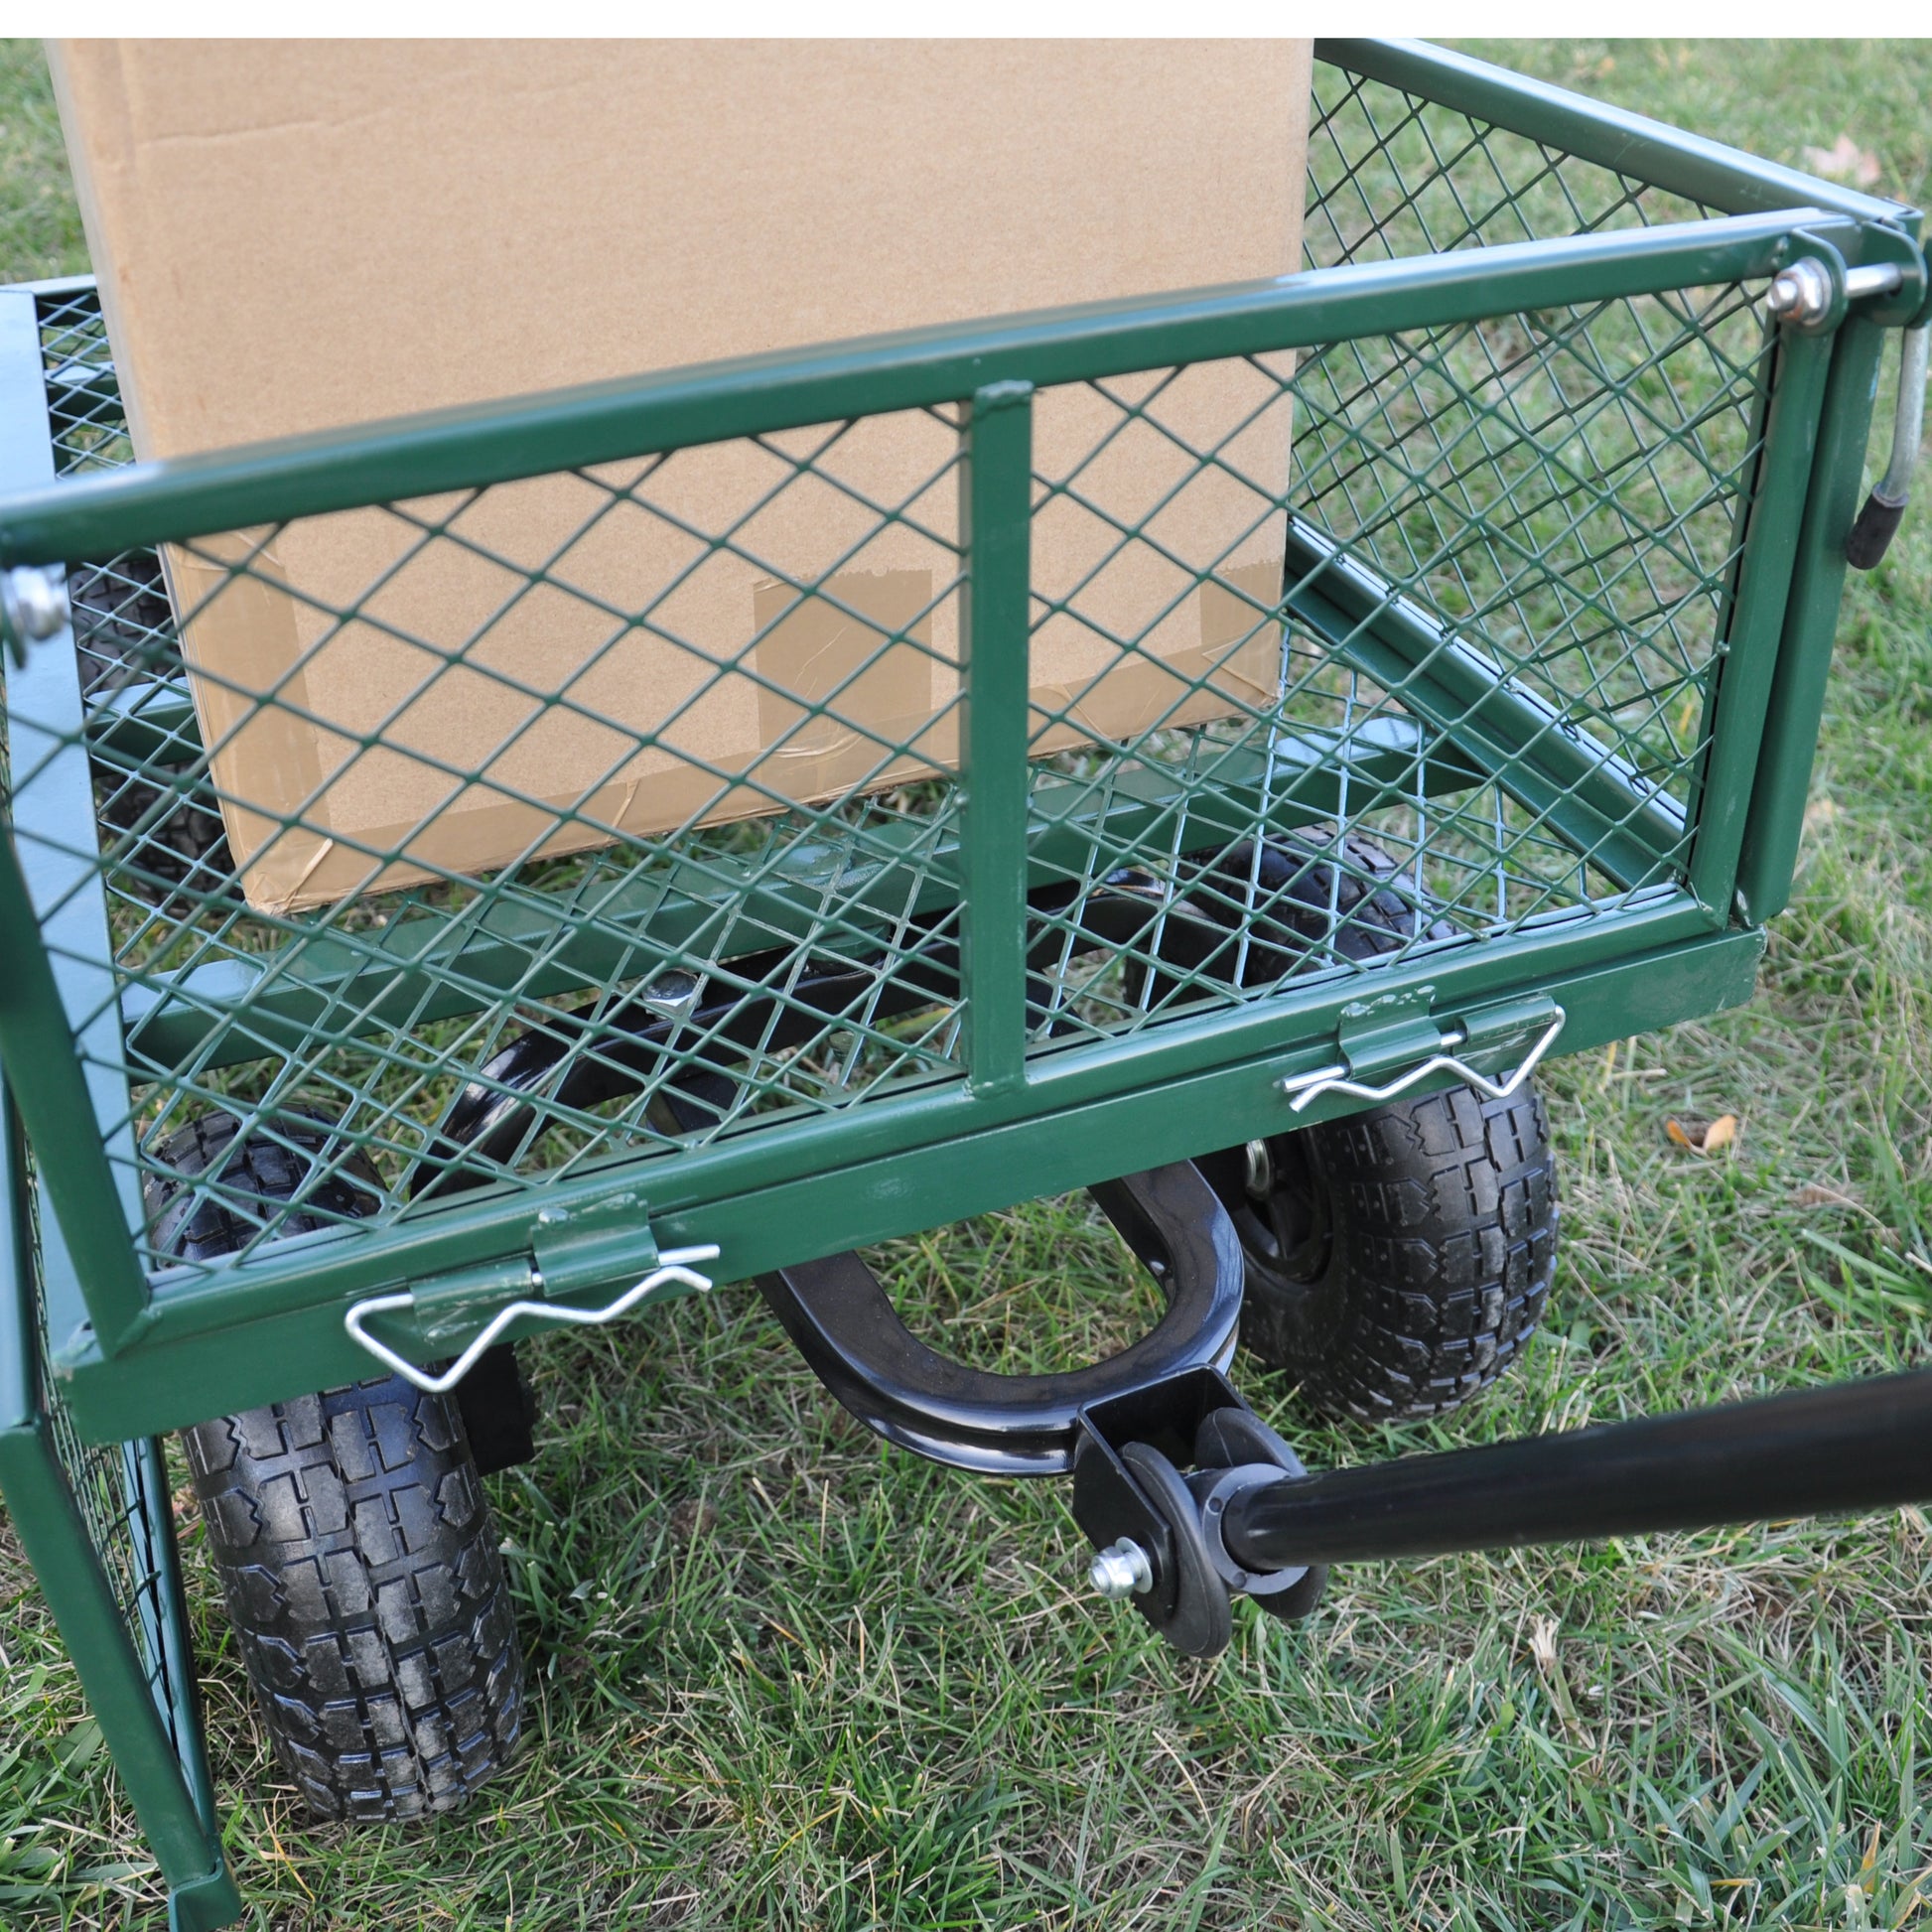 Wagon Cart Garden cart trucks make it easier to green-metal